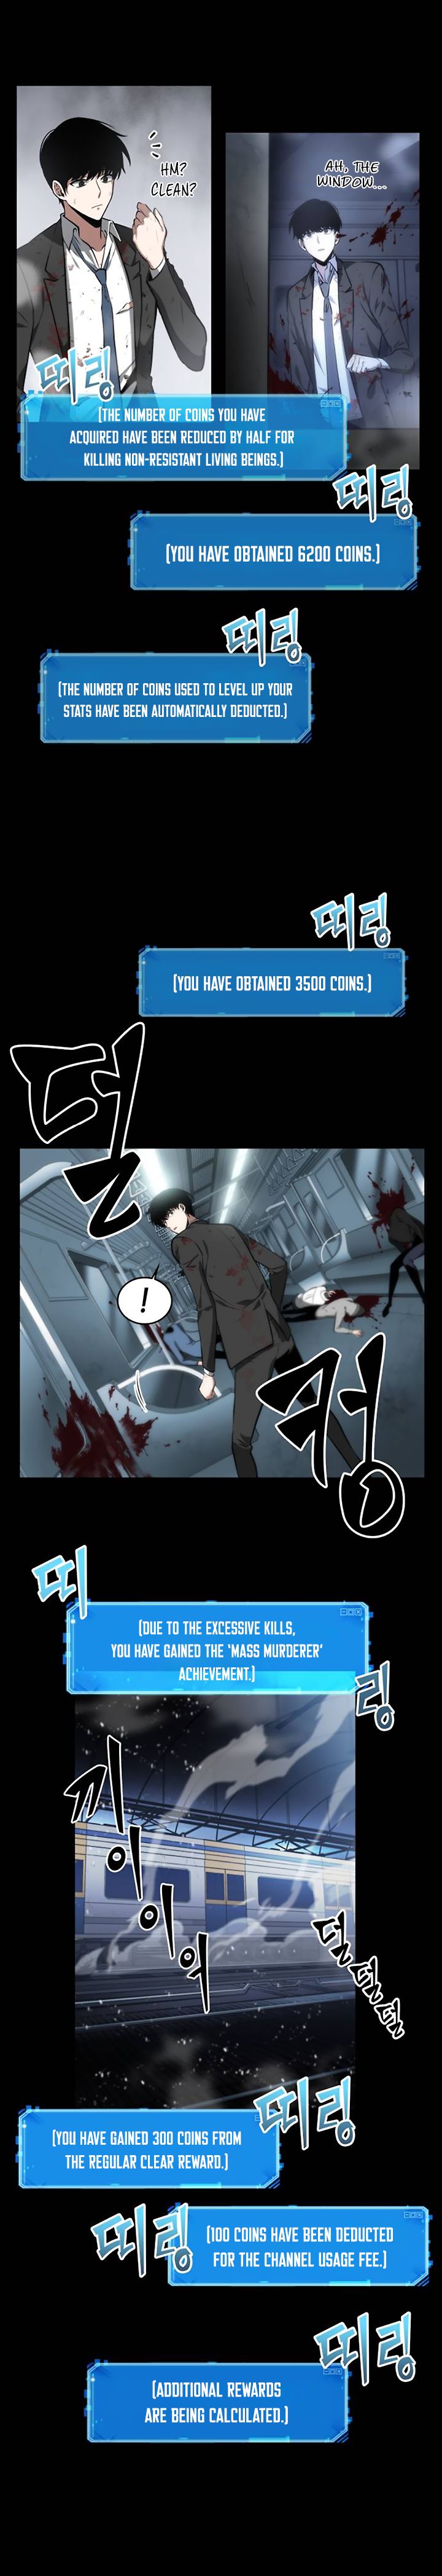 Omniscient Reader's View Manga Manga Chapter - 7 - image 12